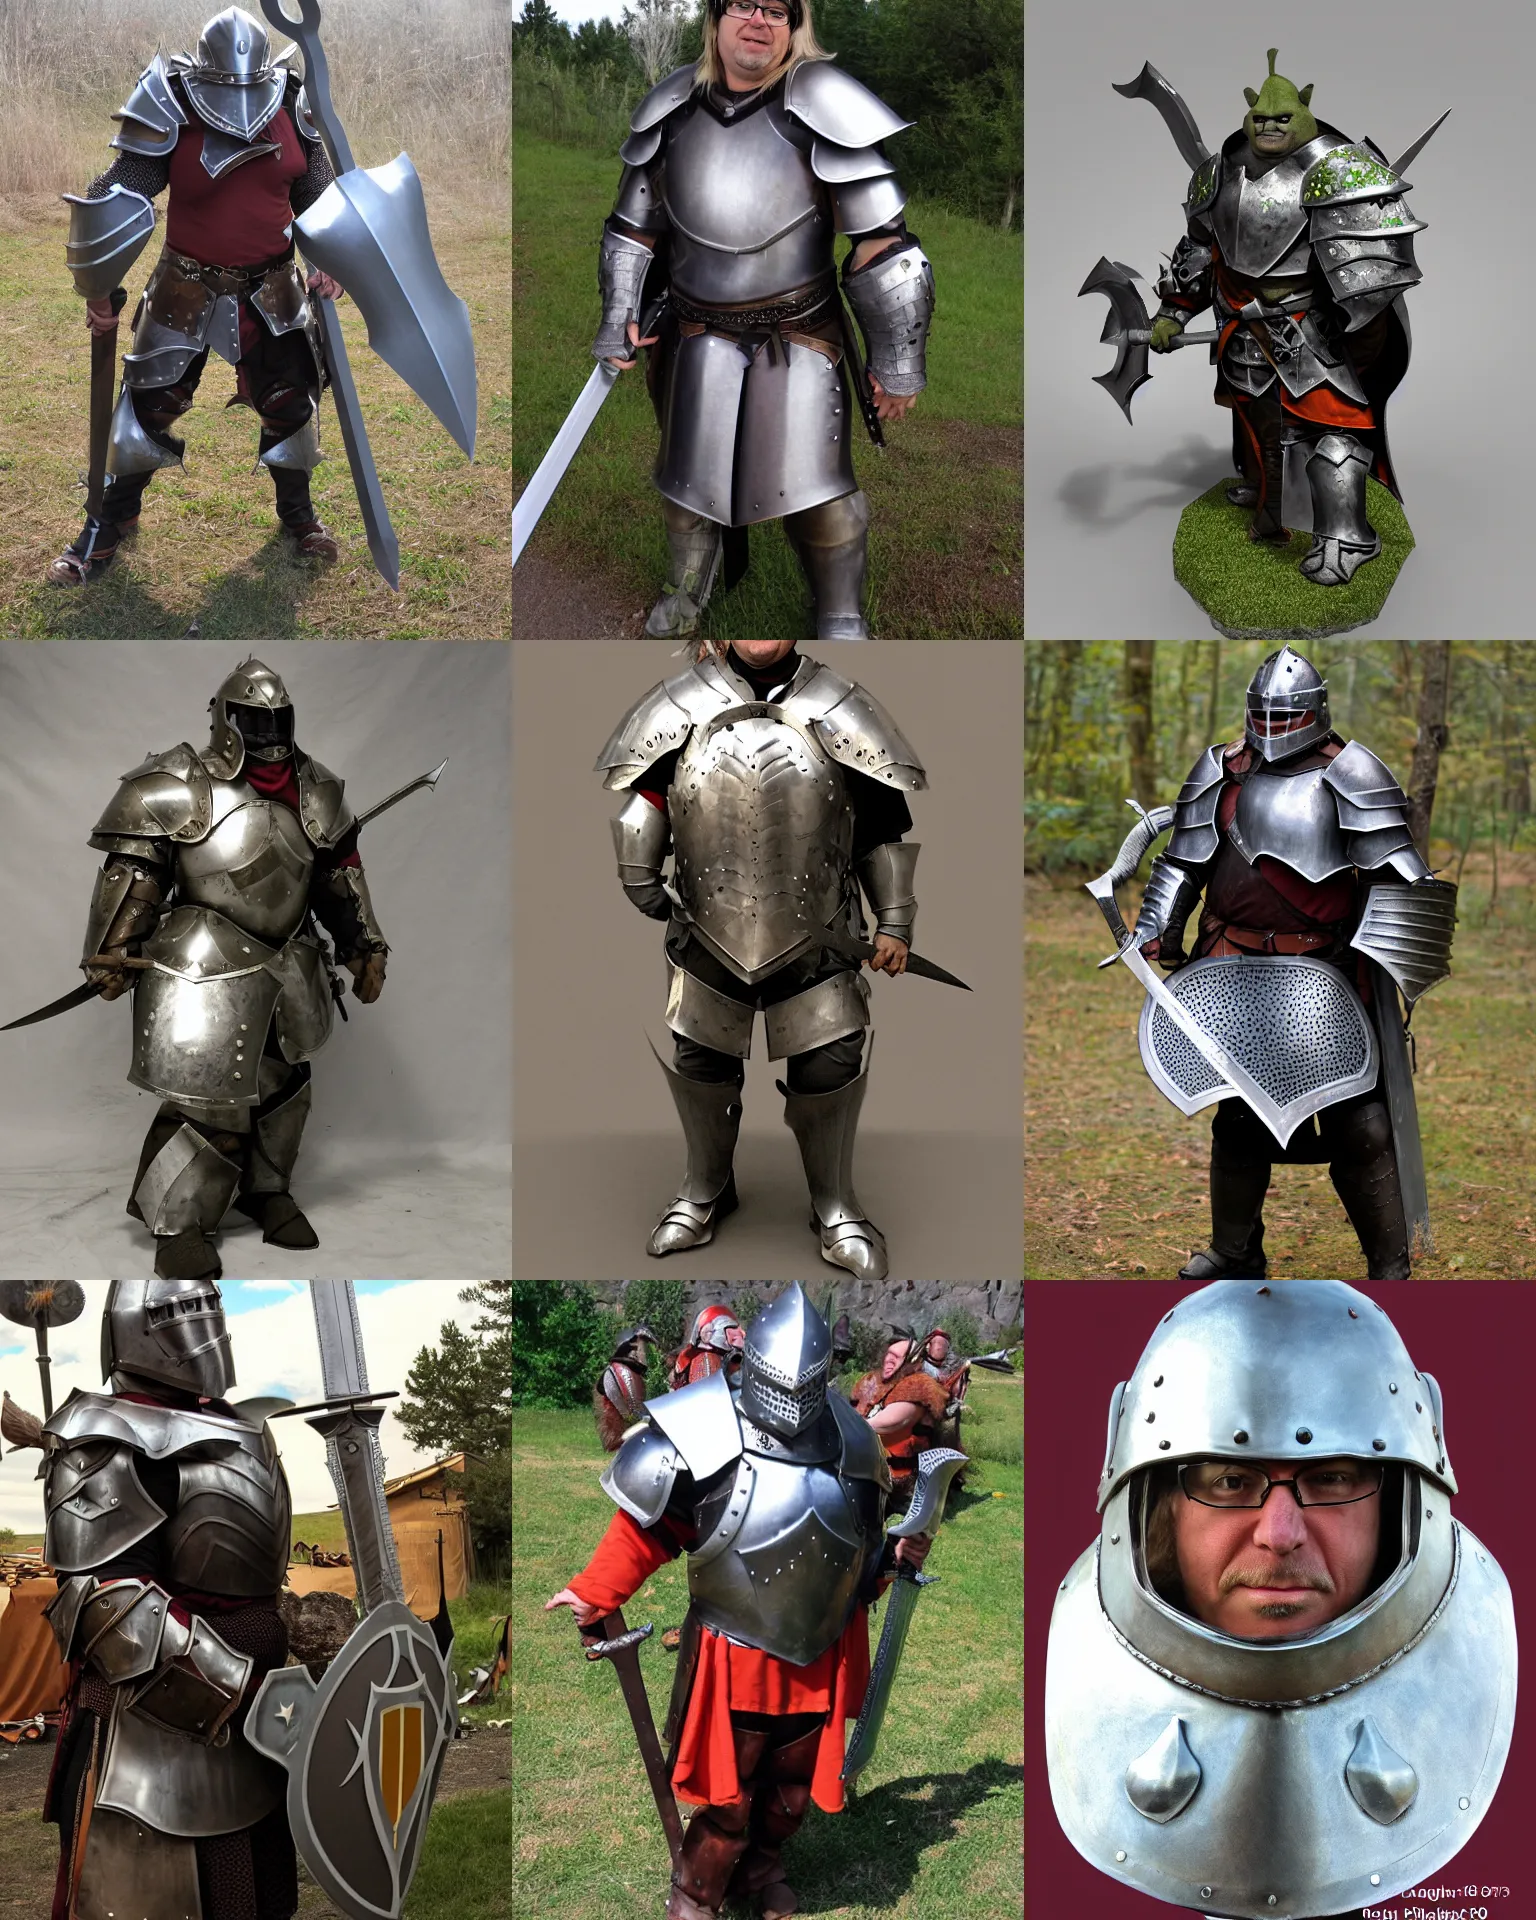 Prompt: ron pelrman as ogre paladin, helmet, plate armor, sword, dnd style